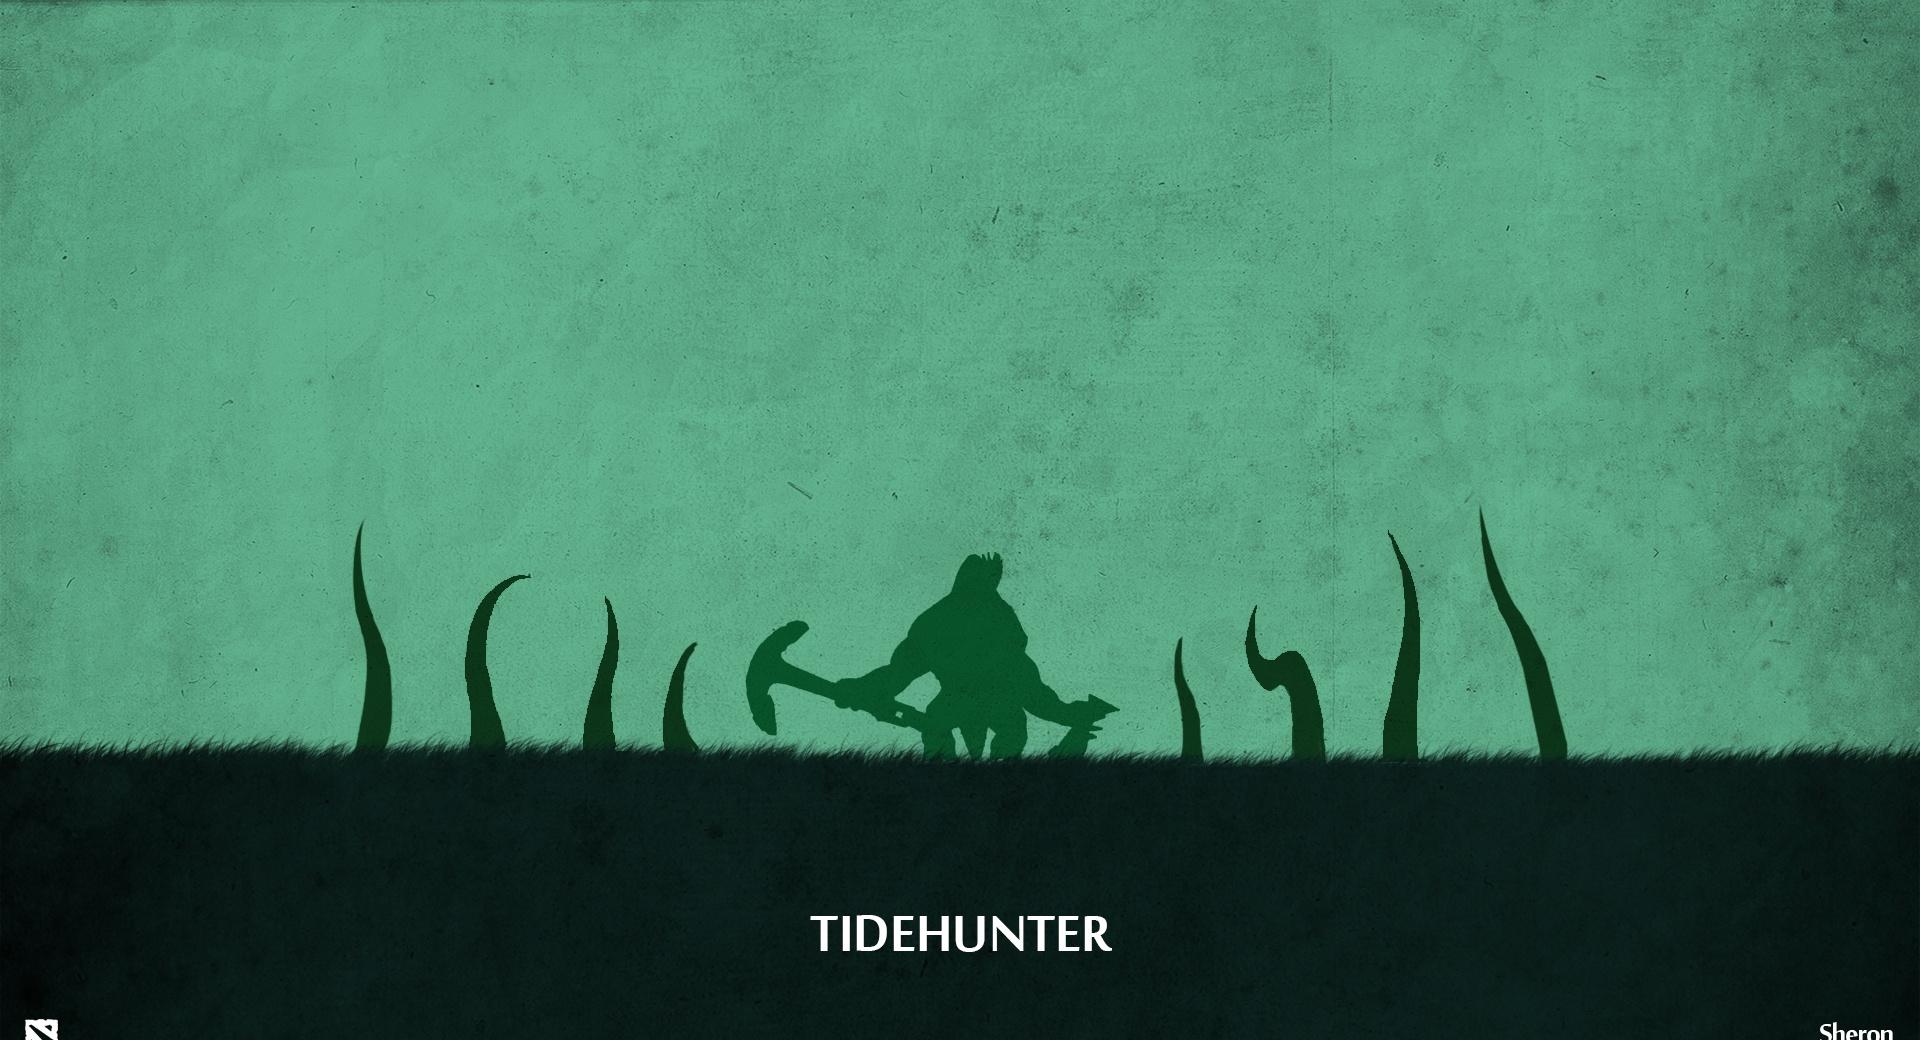 Tidehunter - DotA 2 at 1600 x 1200 size wallpapers HD quality